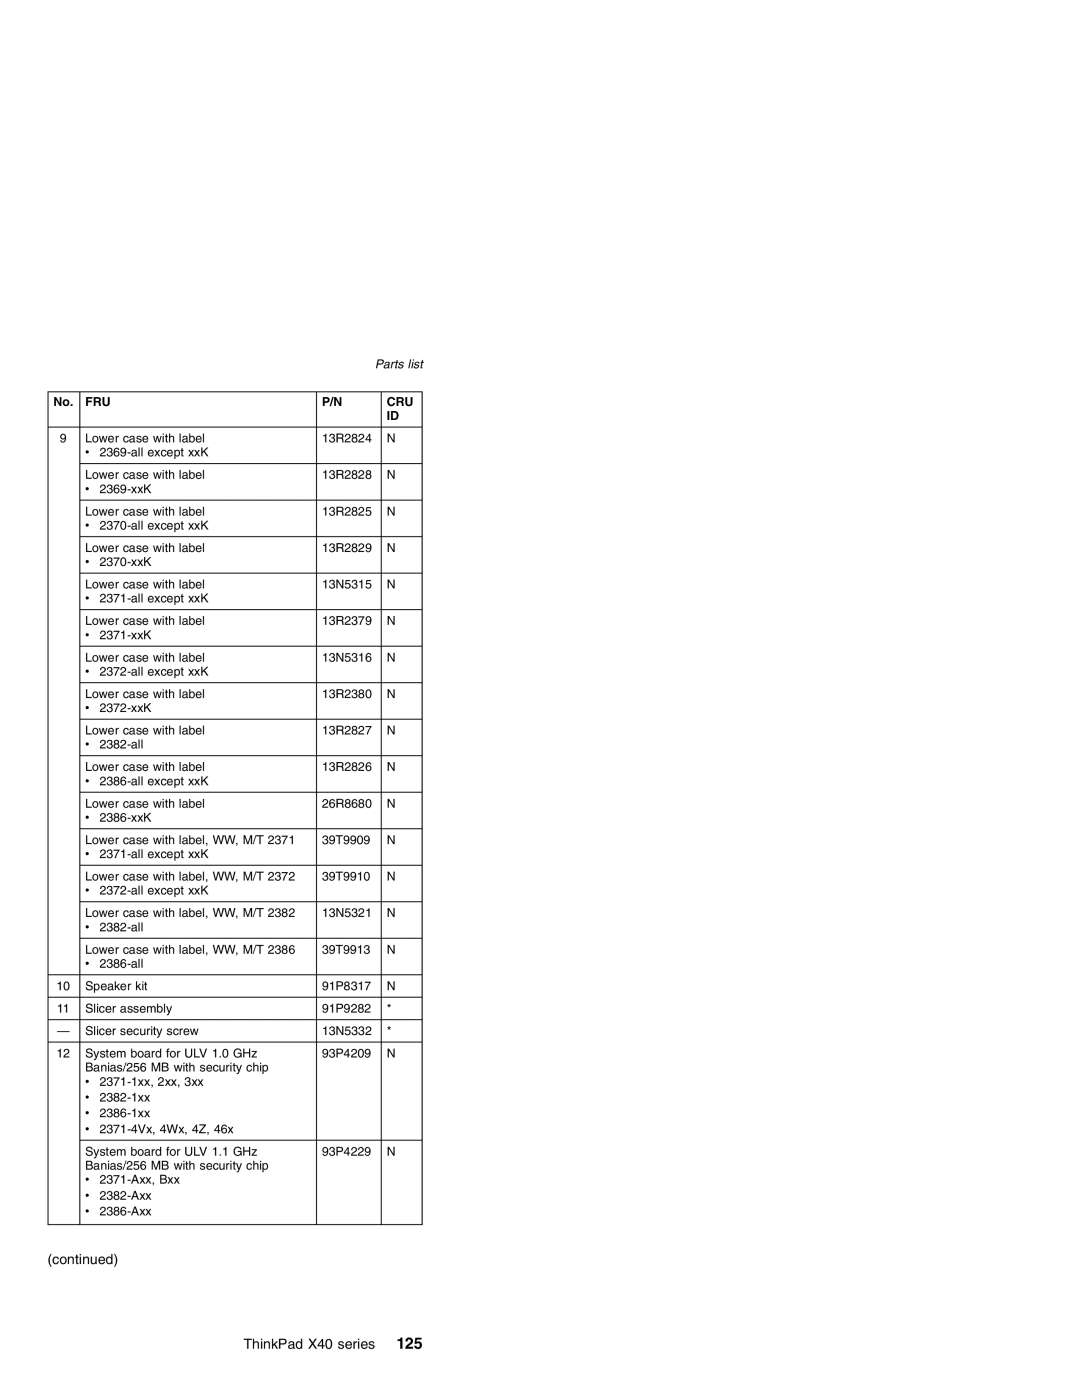 Lenovo MT 2369 manual continued, ThinkPad X40 series, Parts list 